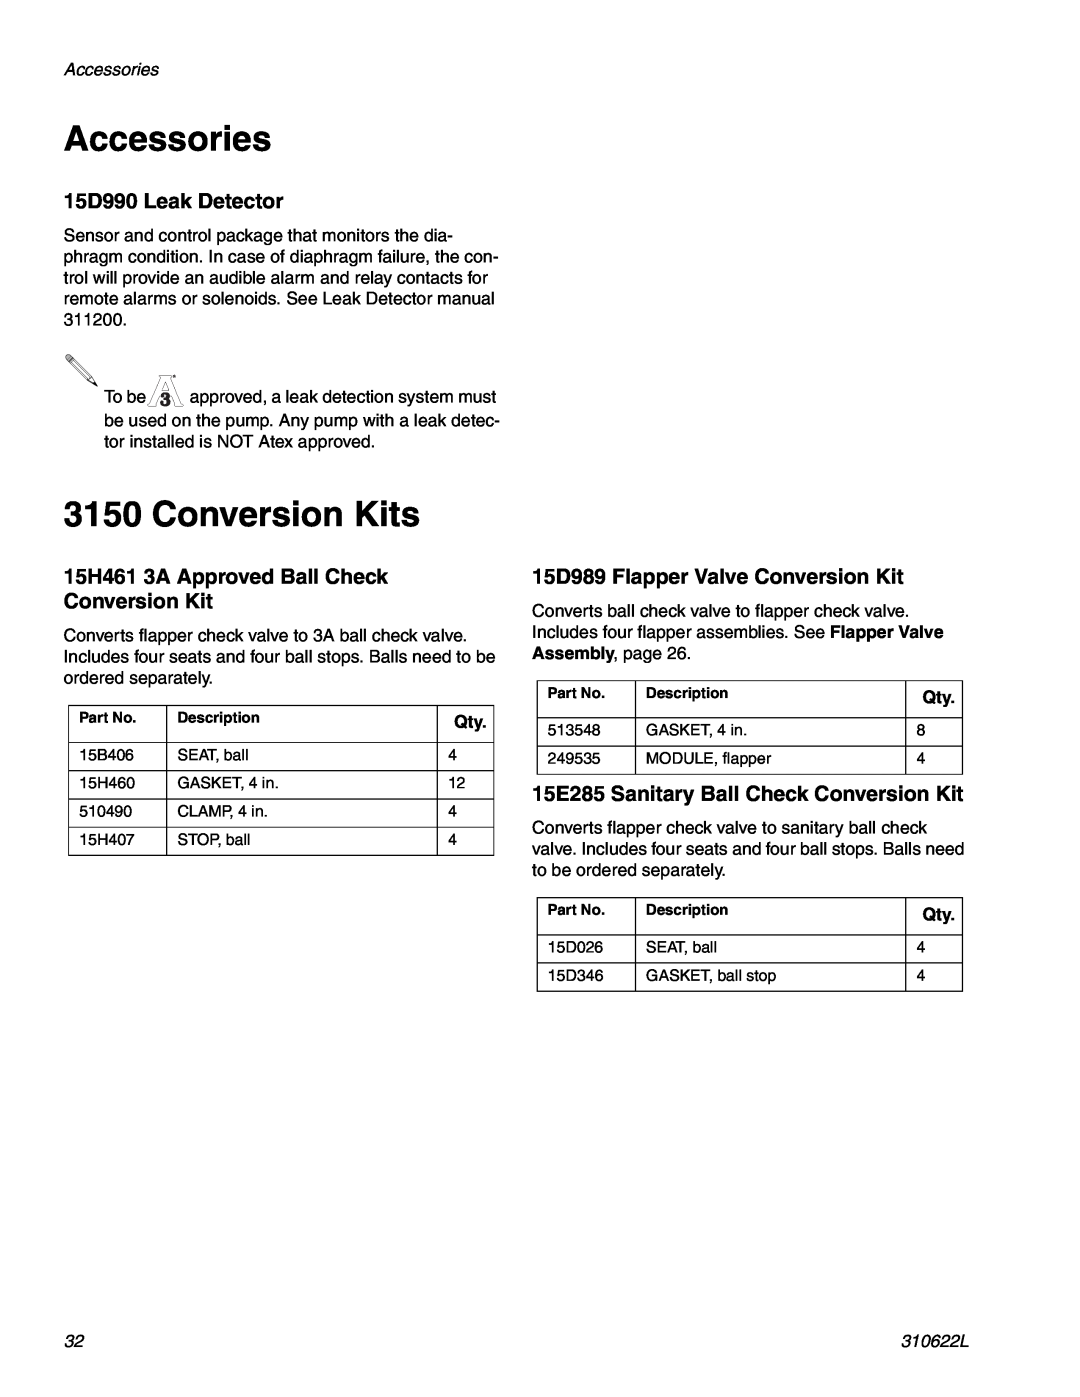 Haier 3150 SA Accessories, Conversion Kits, 15D990 Leak Detector, 15H461 3A Approved Ball Check Conversion Kit, 310622L 